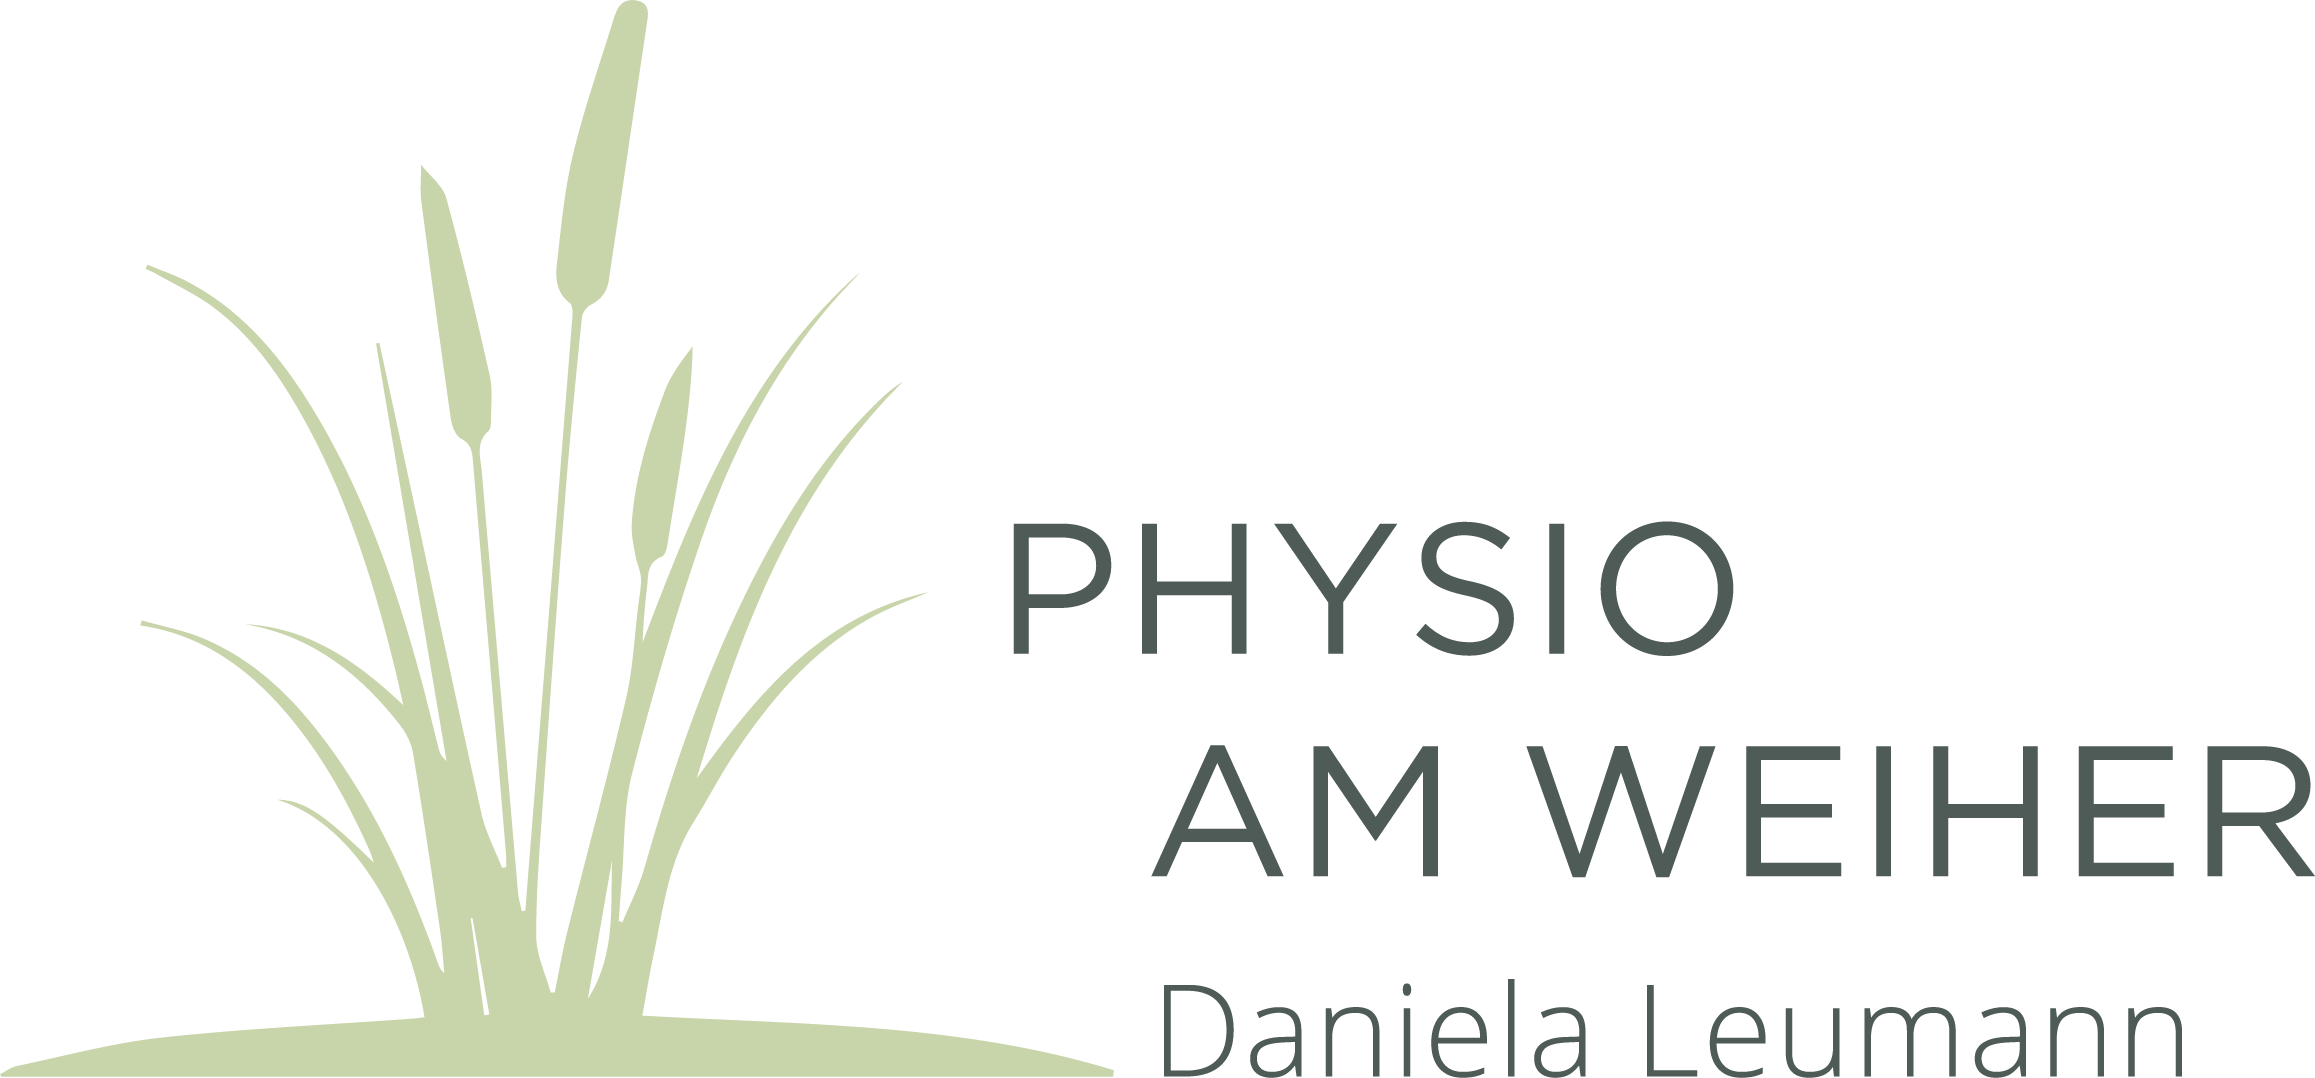 Physio am Weiher Daniela Leumann